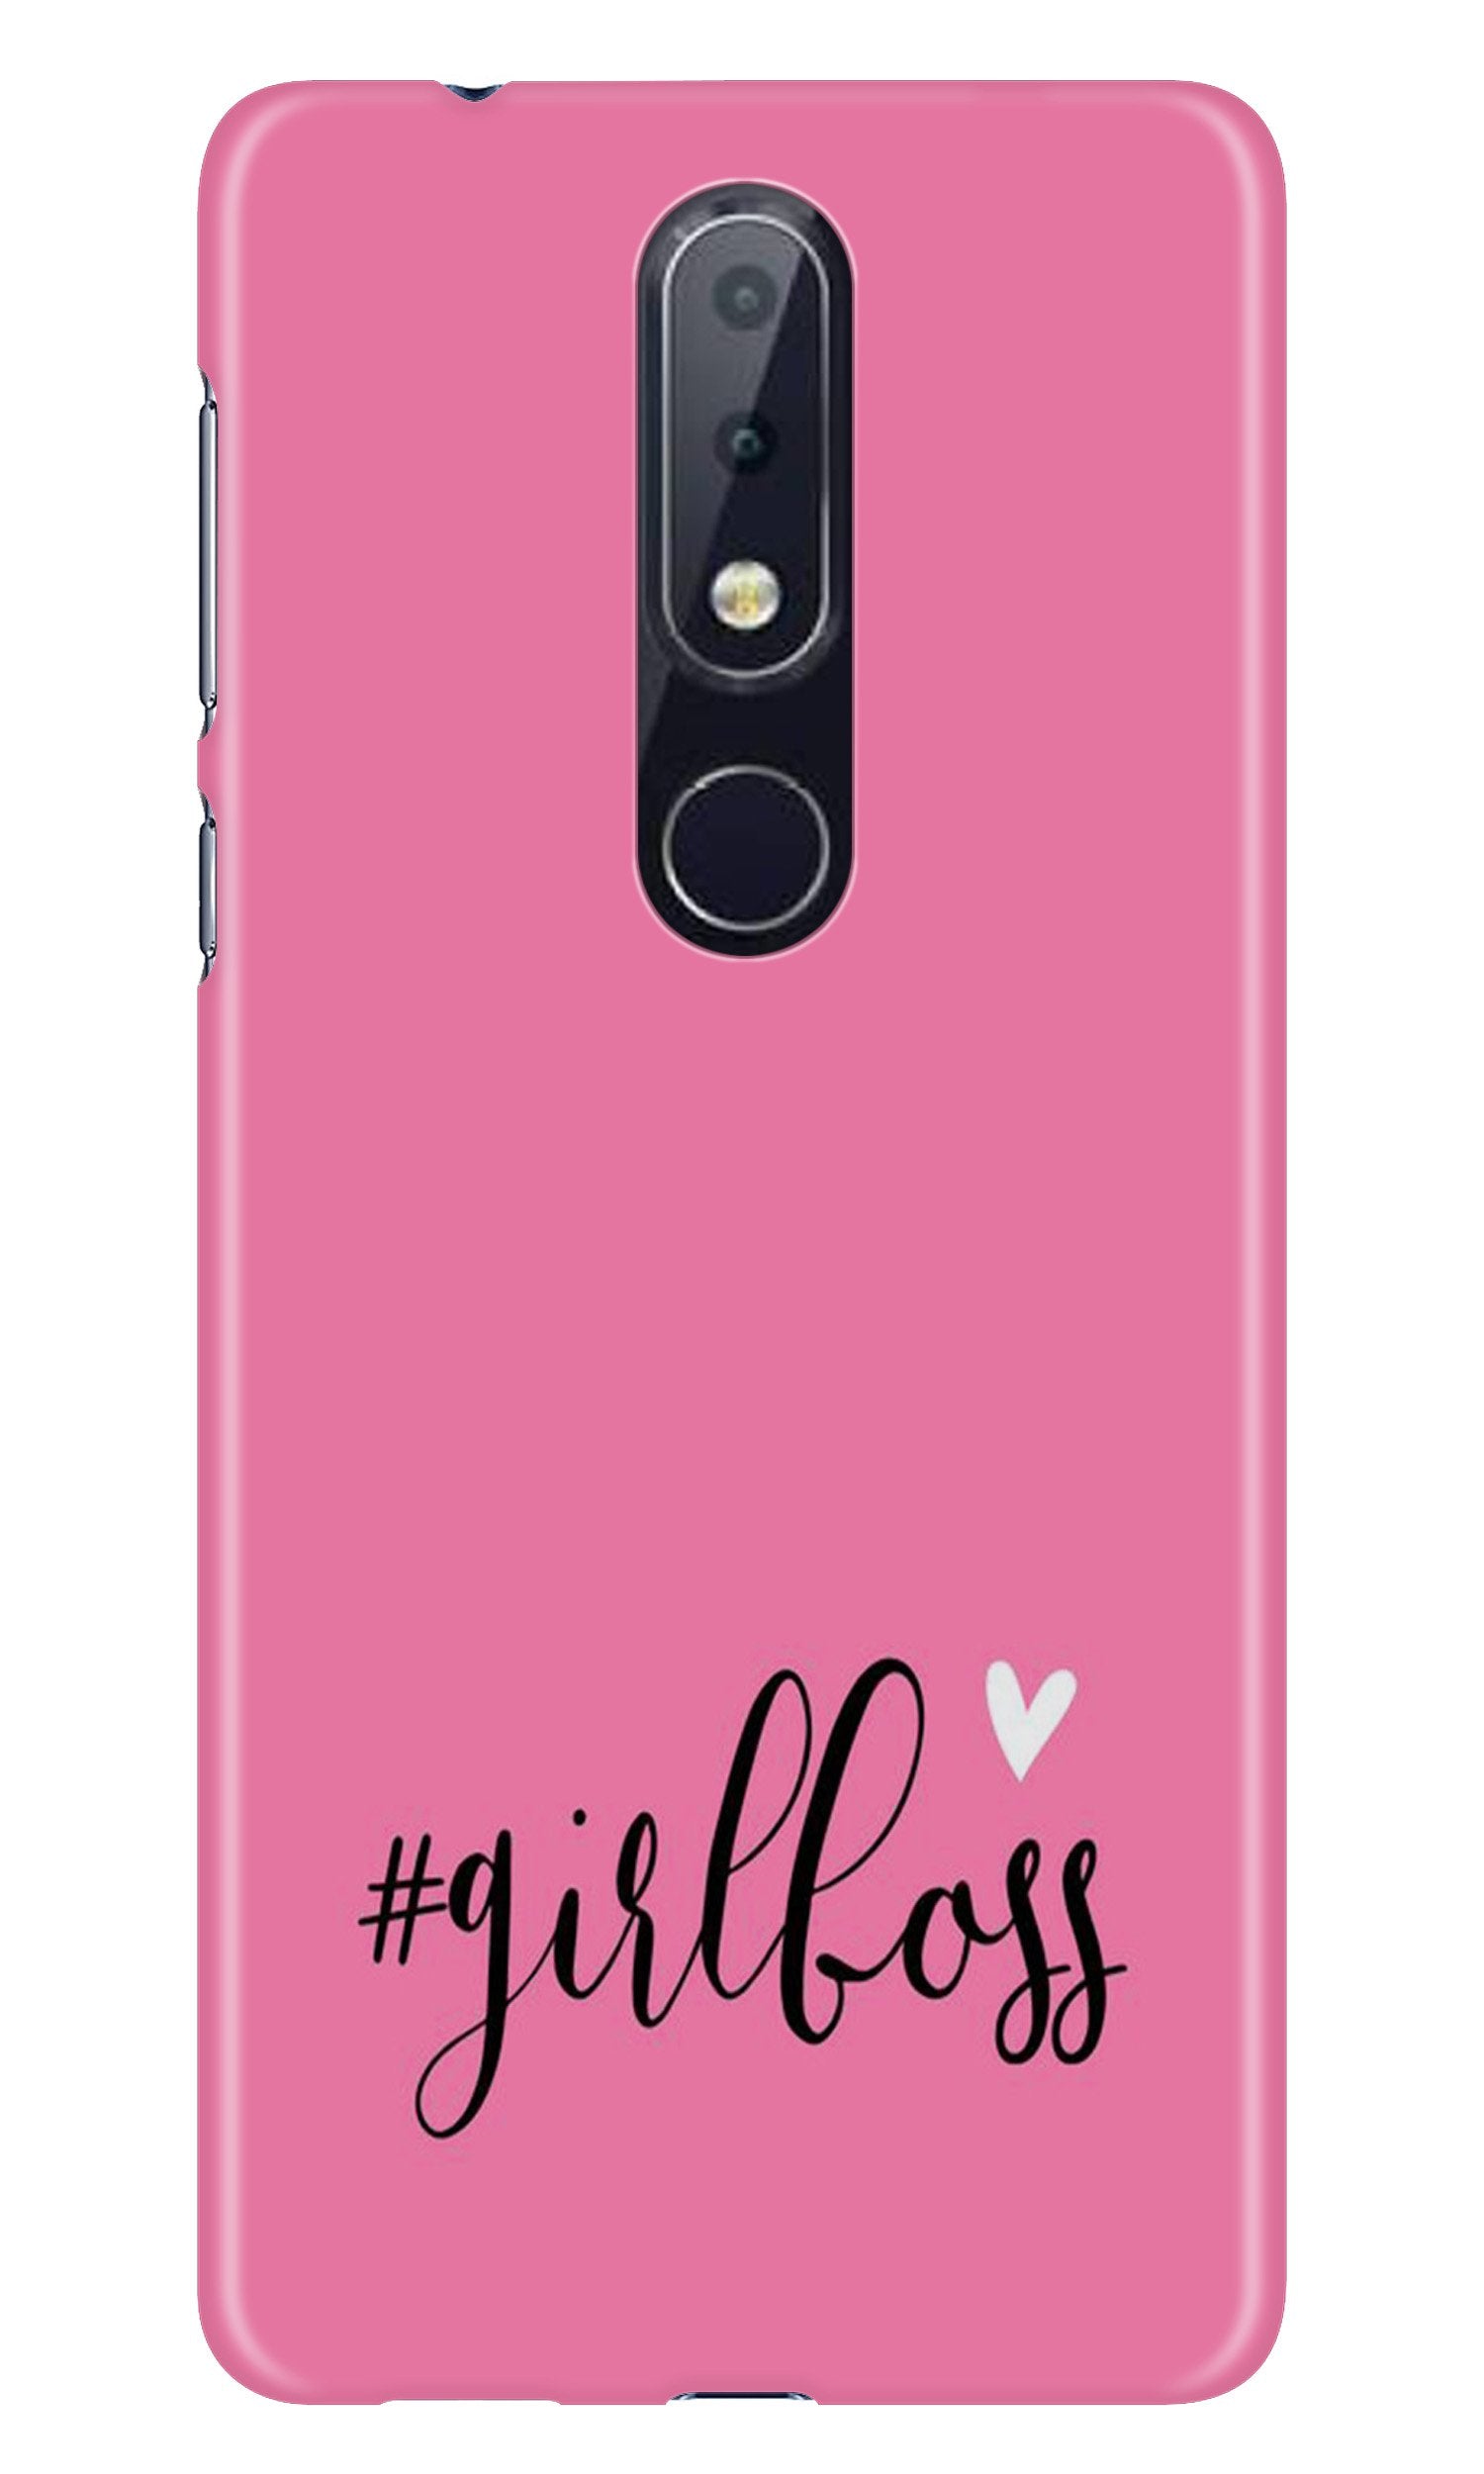 Girl Boss Pink Case for Nokia 7.1 (Design No. 269)